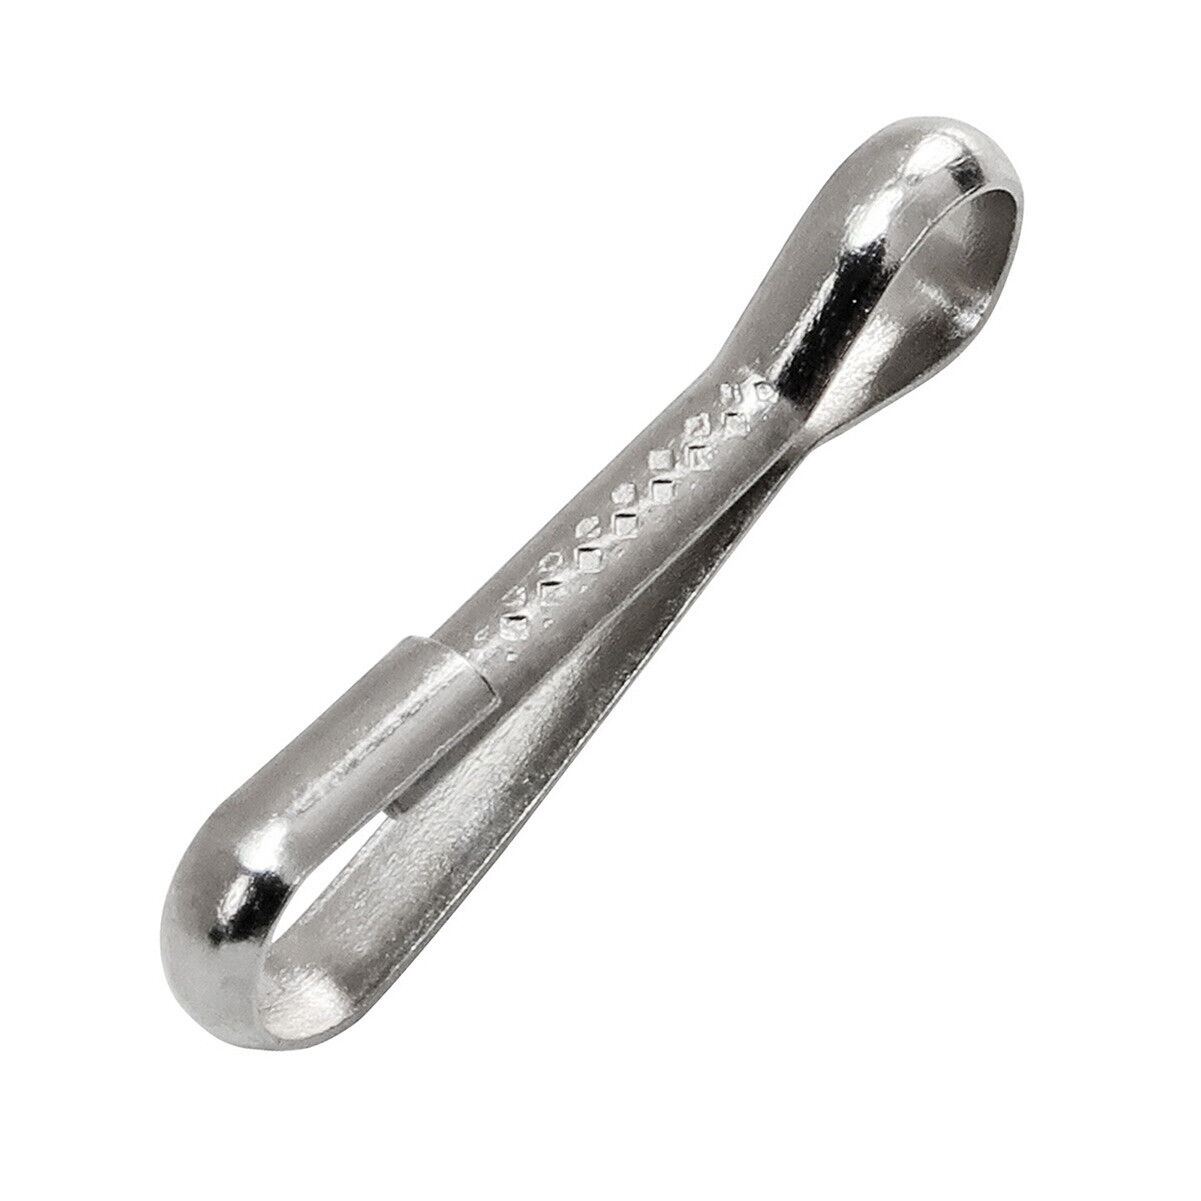 10 Small Metal J Hook Spring Clips for DIY Lanyards & Keychains - 1 1/4 Inch Specialist ID 7743-1020 - фотография #6